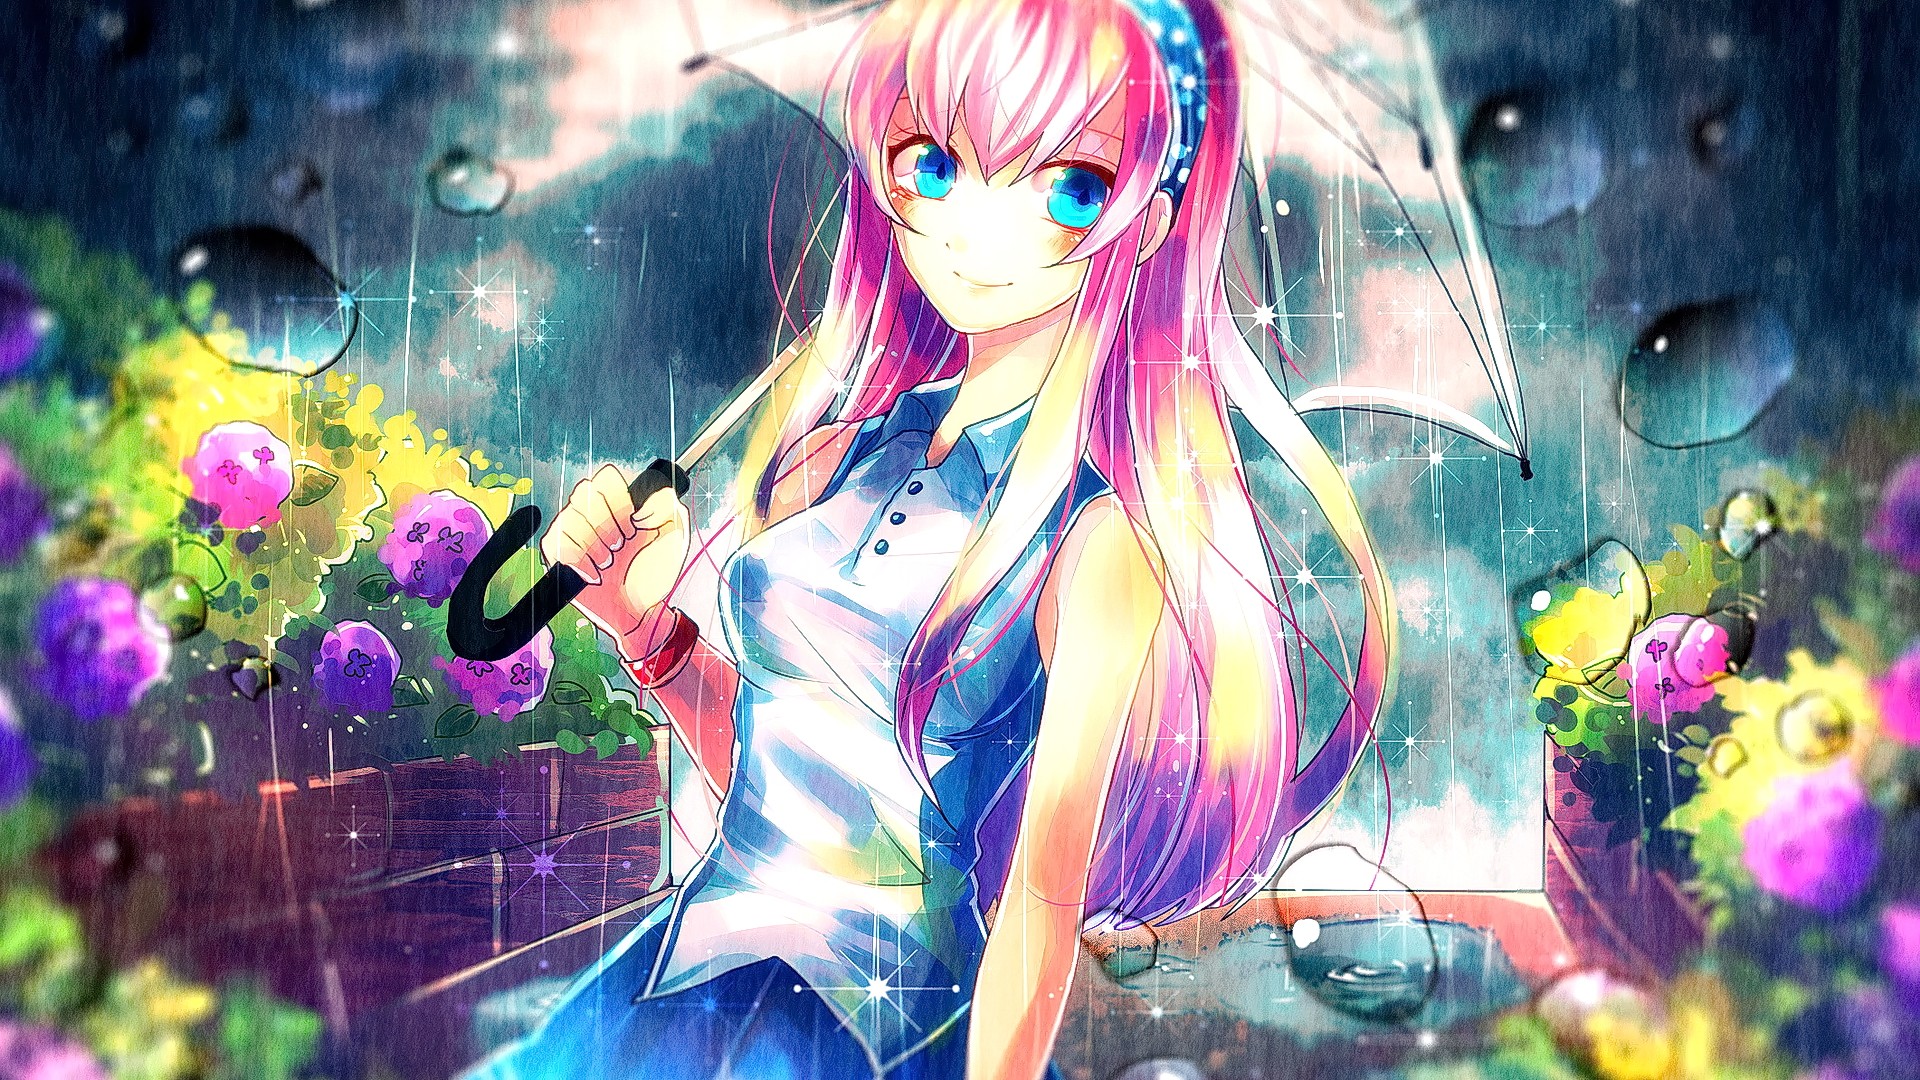 Anime 1920x1080 anime anime girls pink hair umbrella smiling Megurine Luka women with umbrella aqua eyes blue clothing